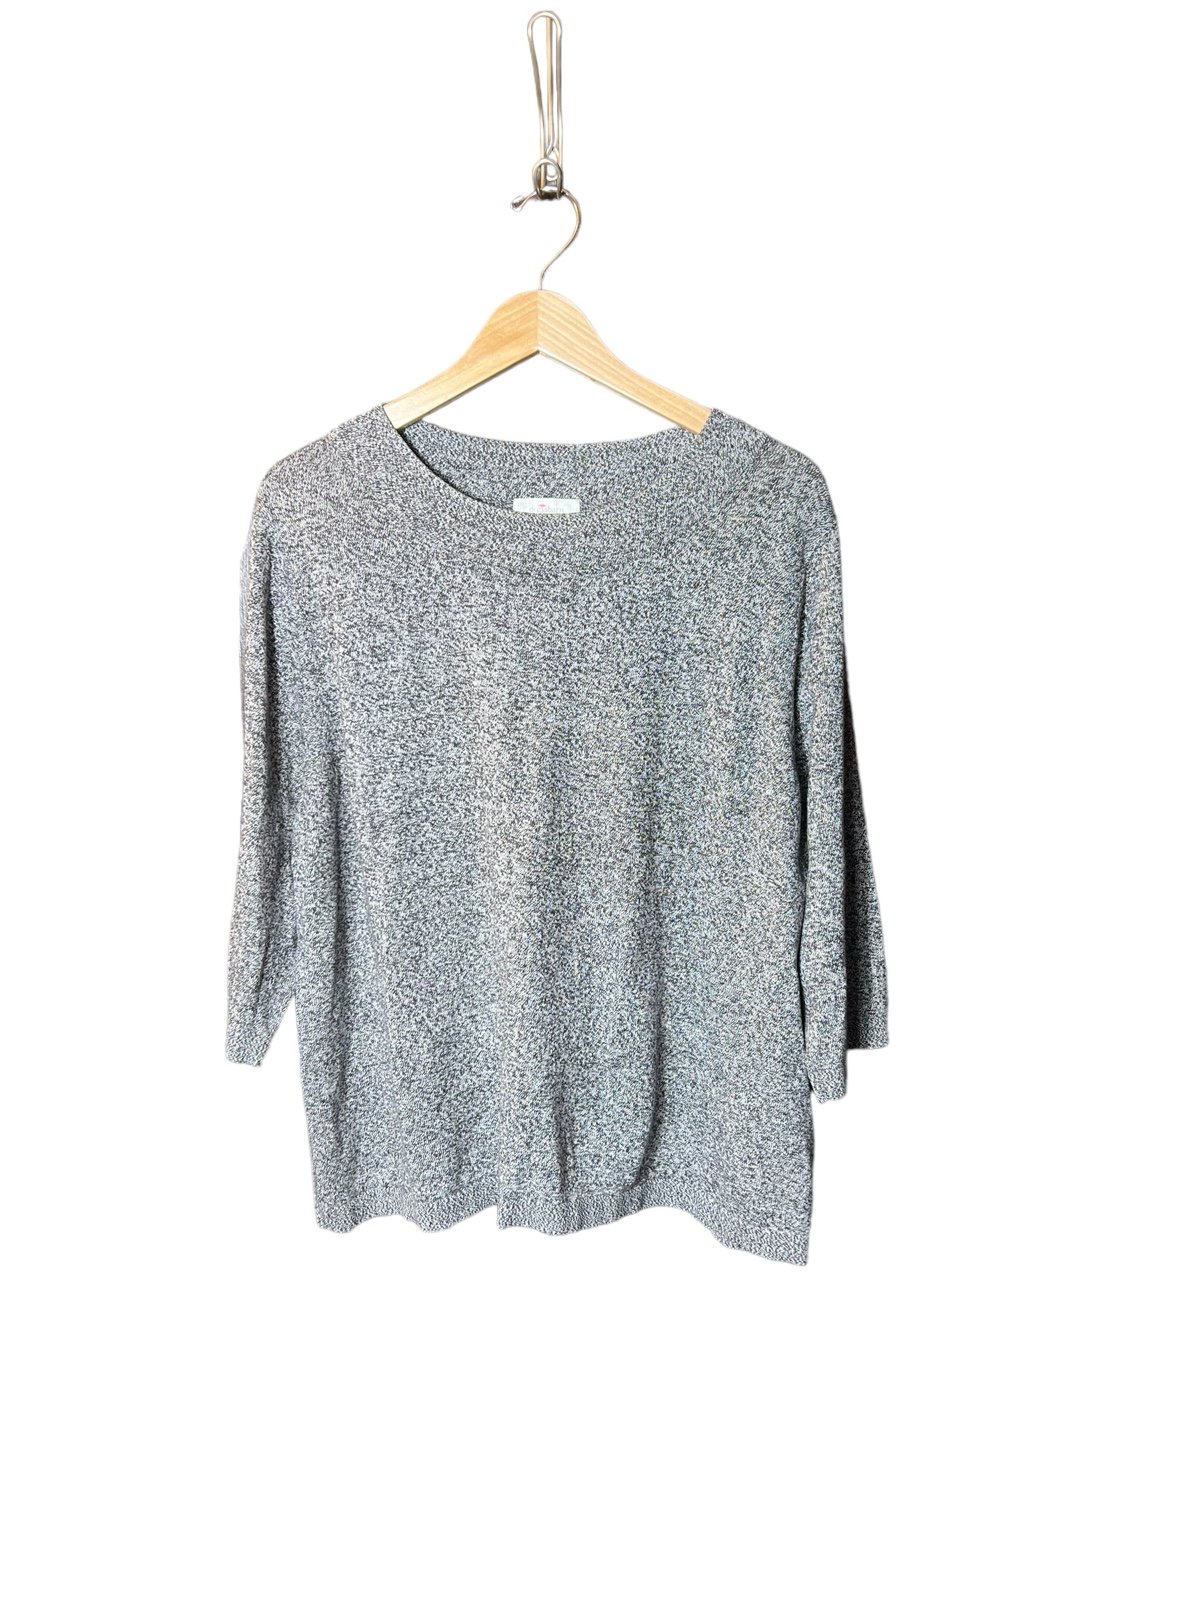 Dressbarn Sweater Women’s 2X Black/White 3/4 Sleeves St